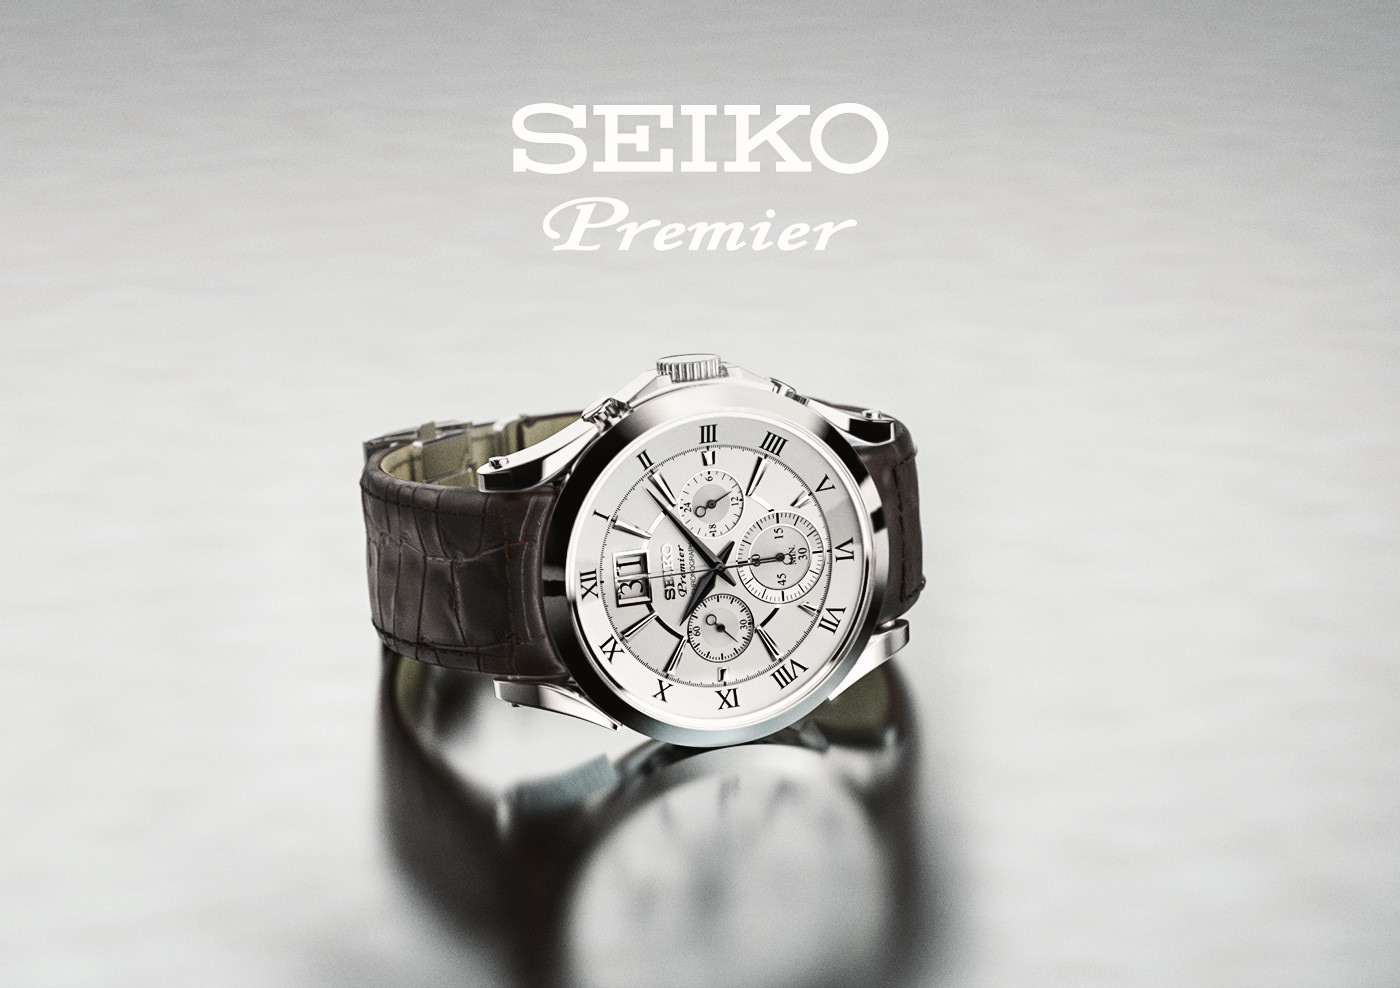 SEIKO premier watch CGI 3ds max Autodesk spc059p1 Martin Kamminga   model keyshot luxion Mudbox groningen